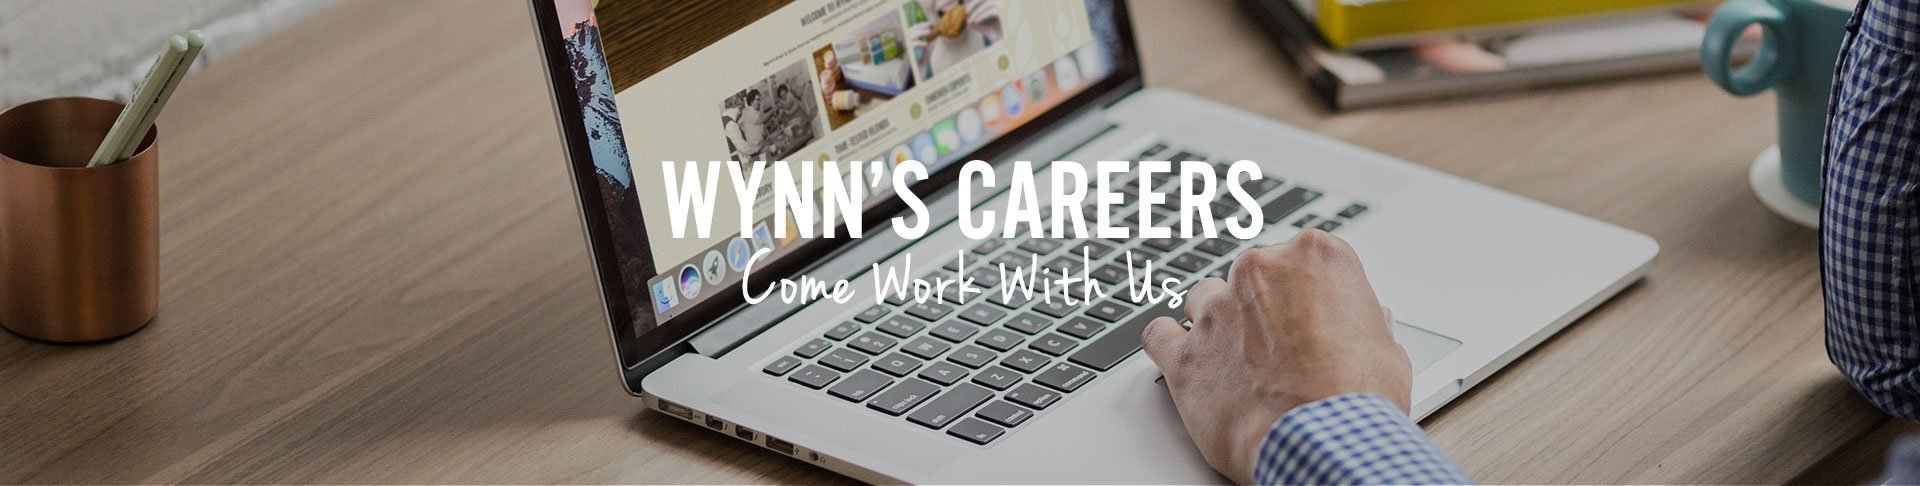 Wynn's Grain and Spice - Careers